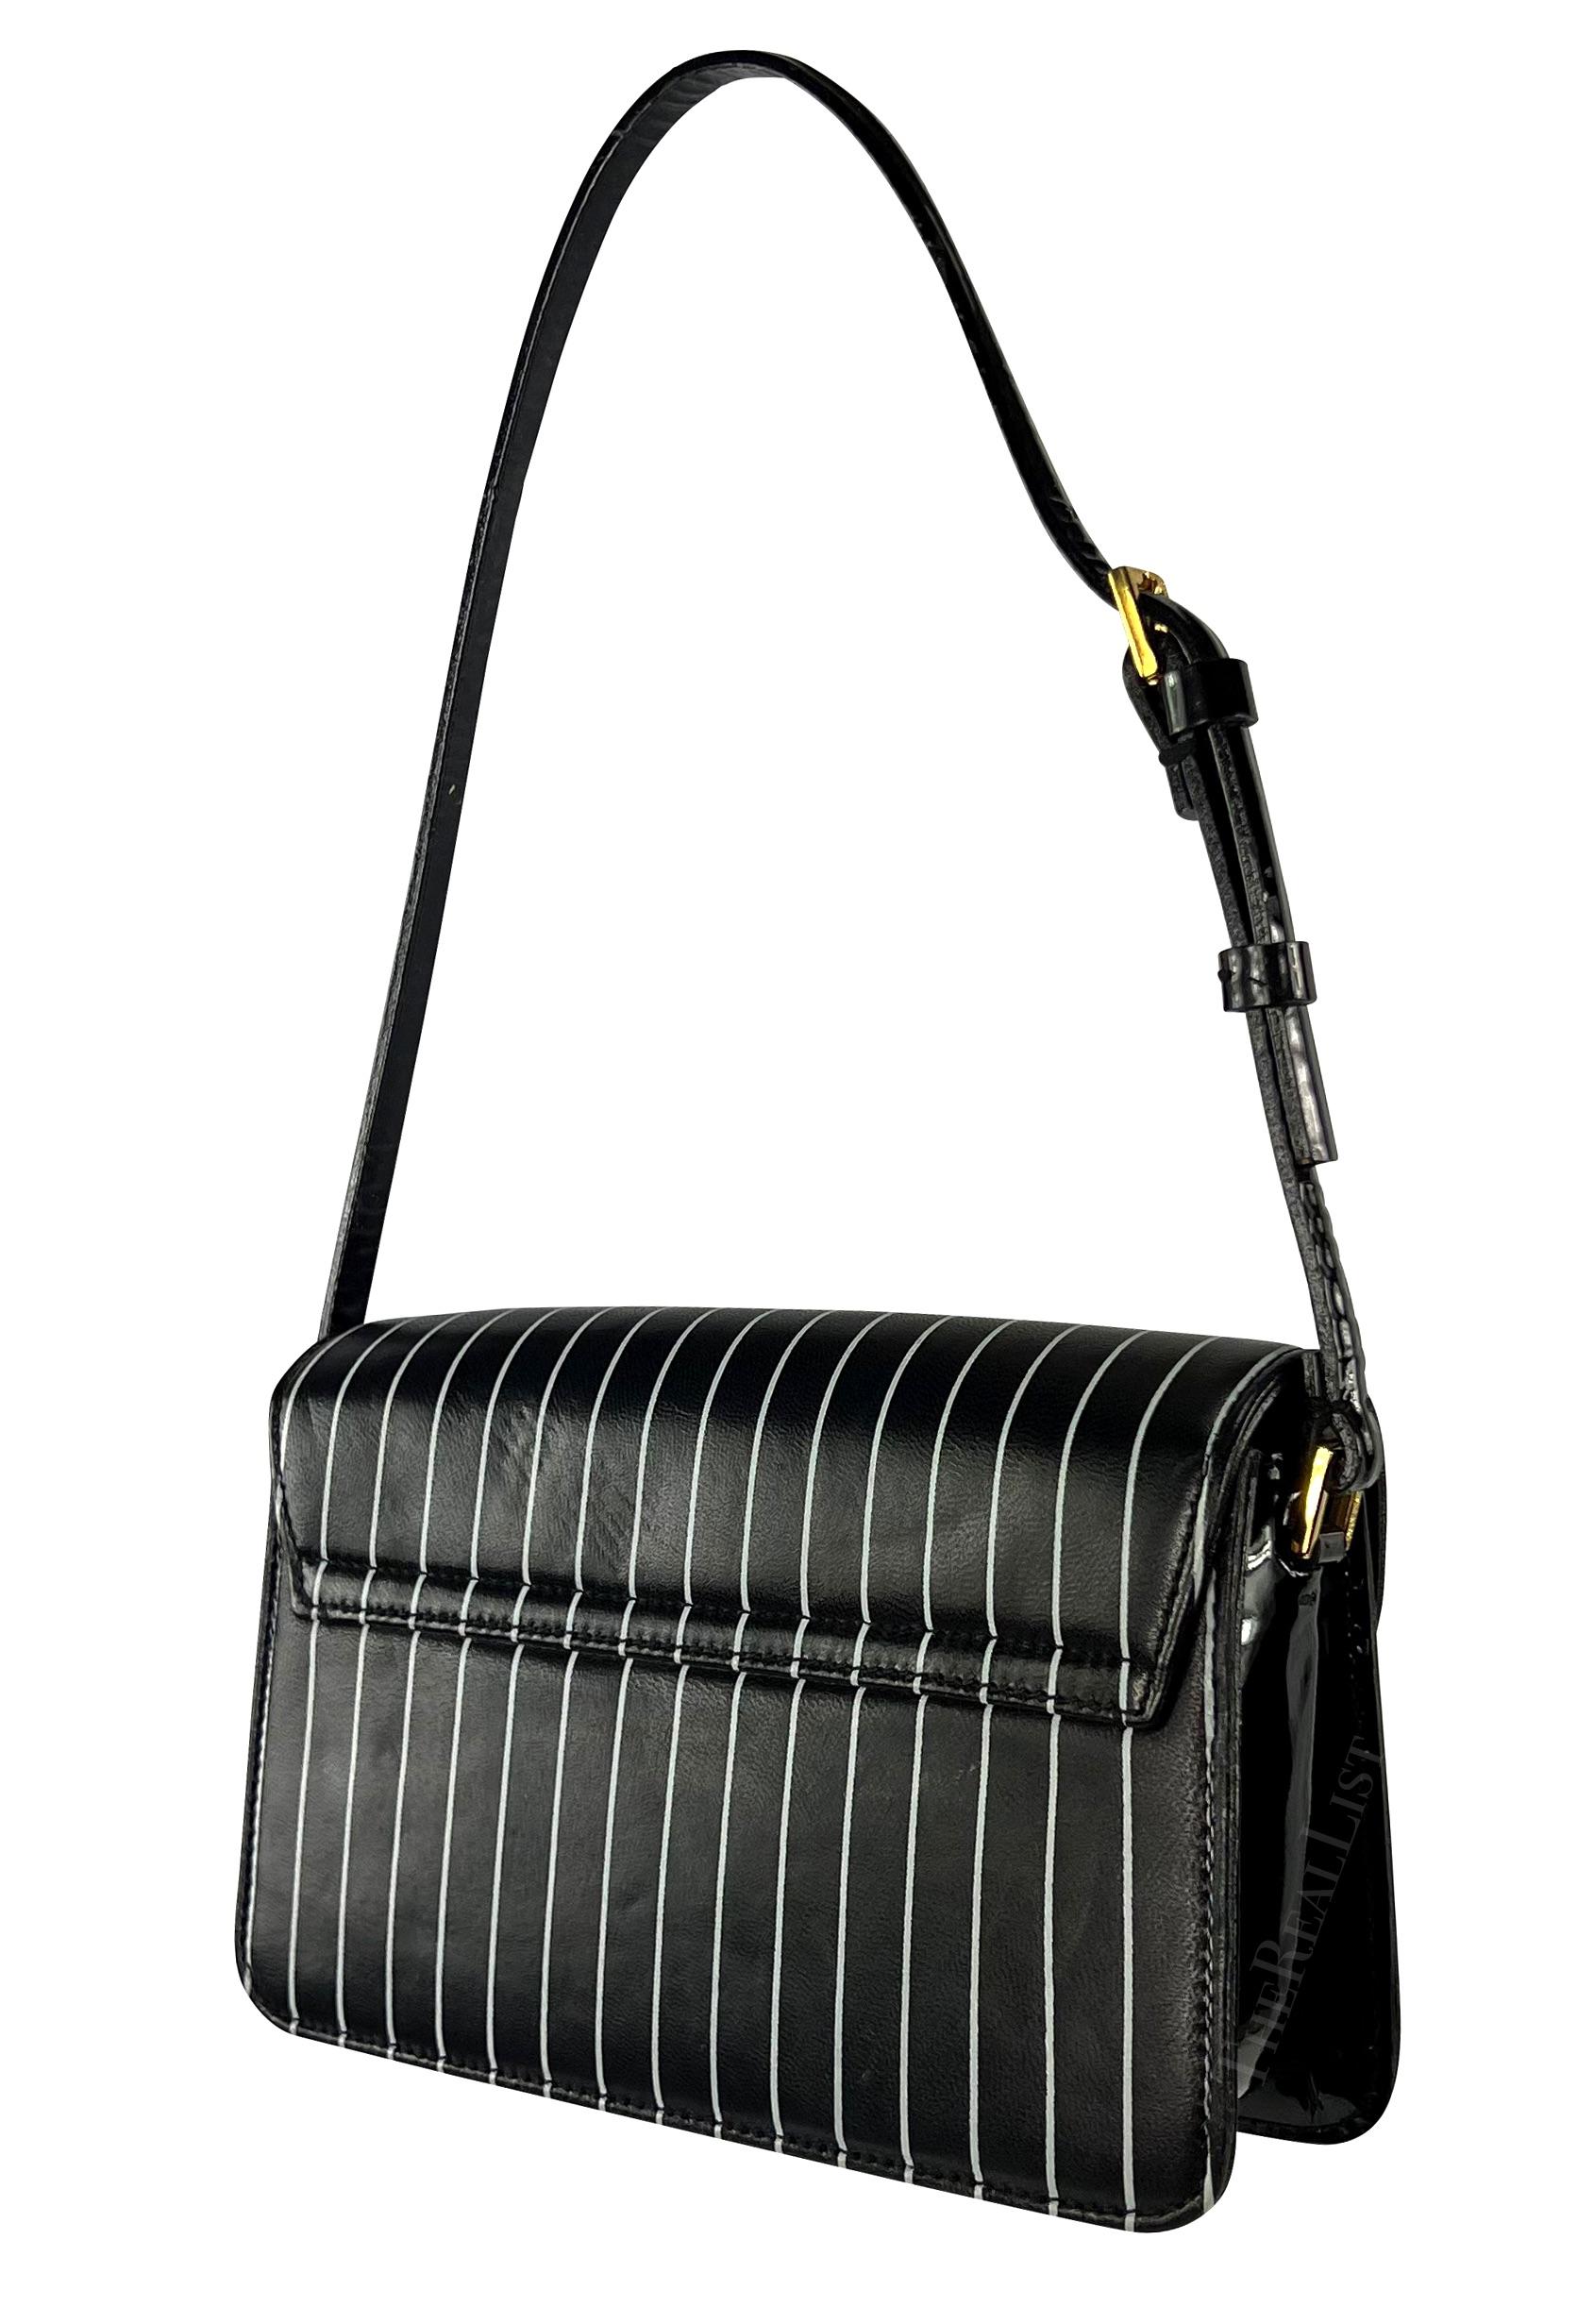 S/S 2001 Dolce & Gabbana Runway Black Pinstripe Leather Patent Mini Shoulder Bag For Sale 4